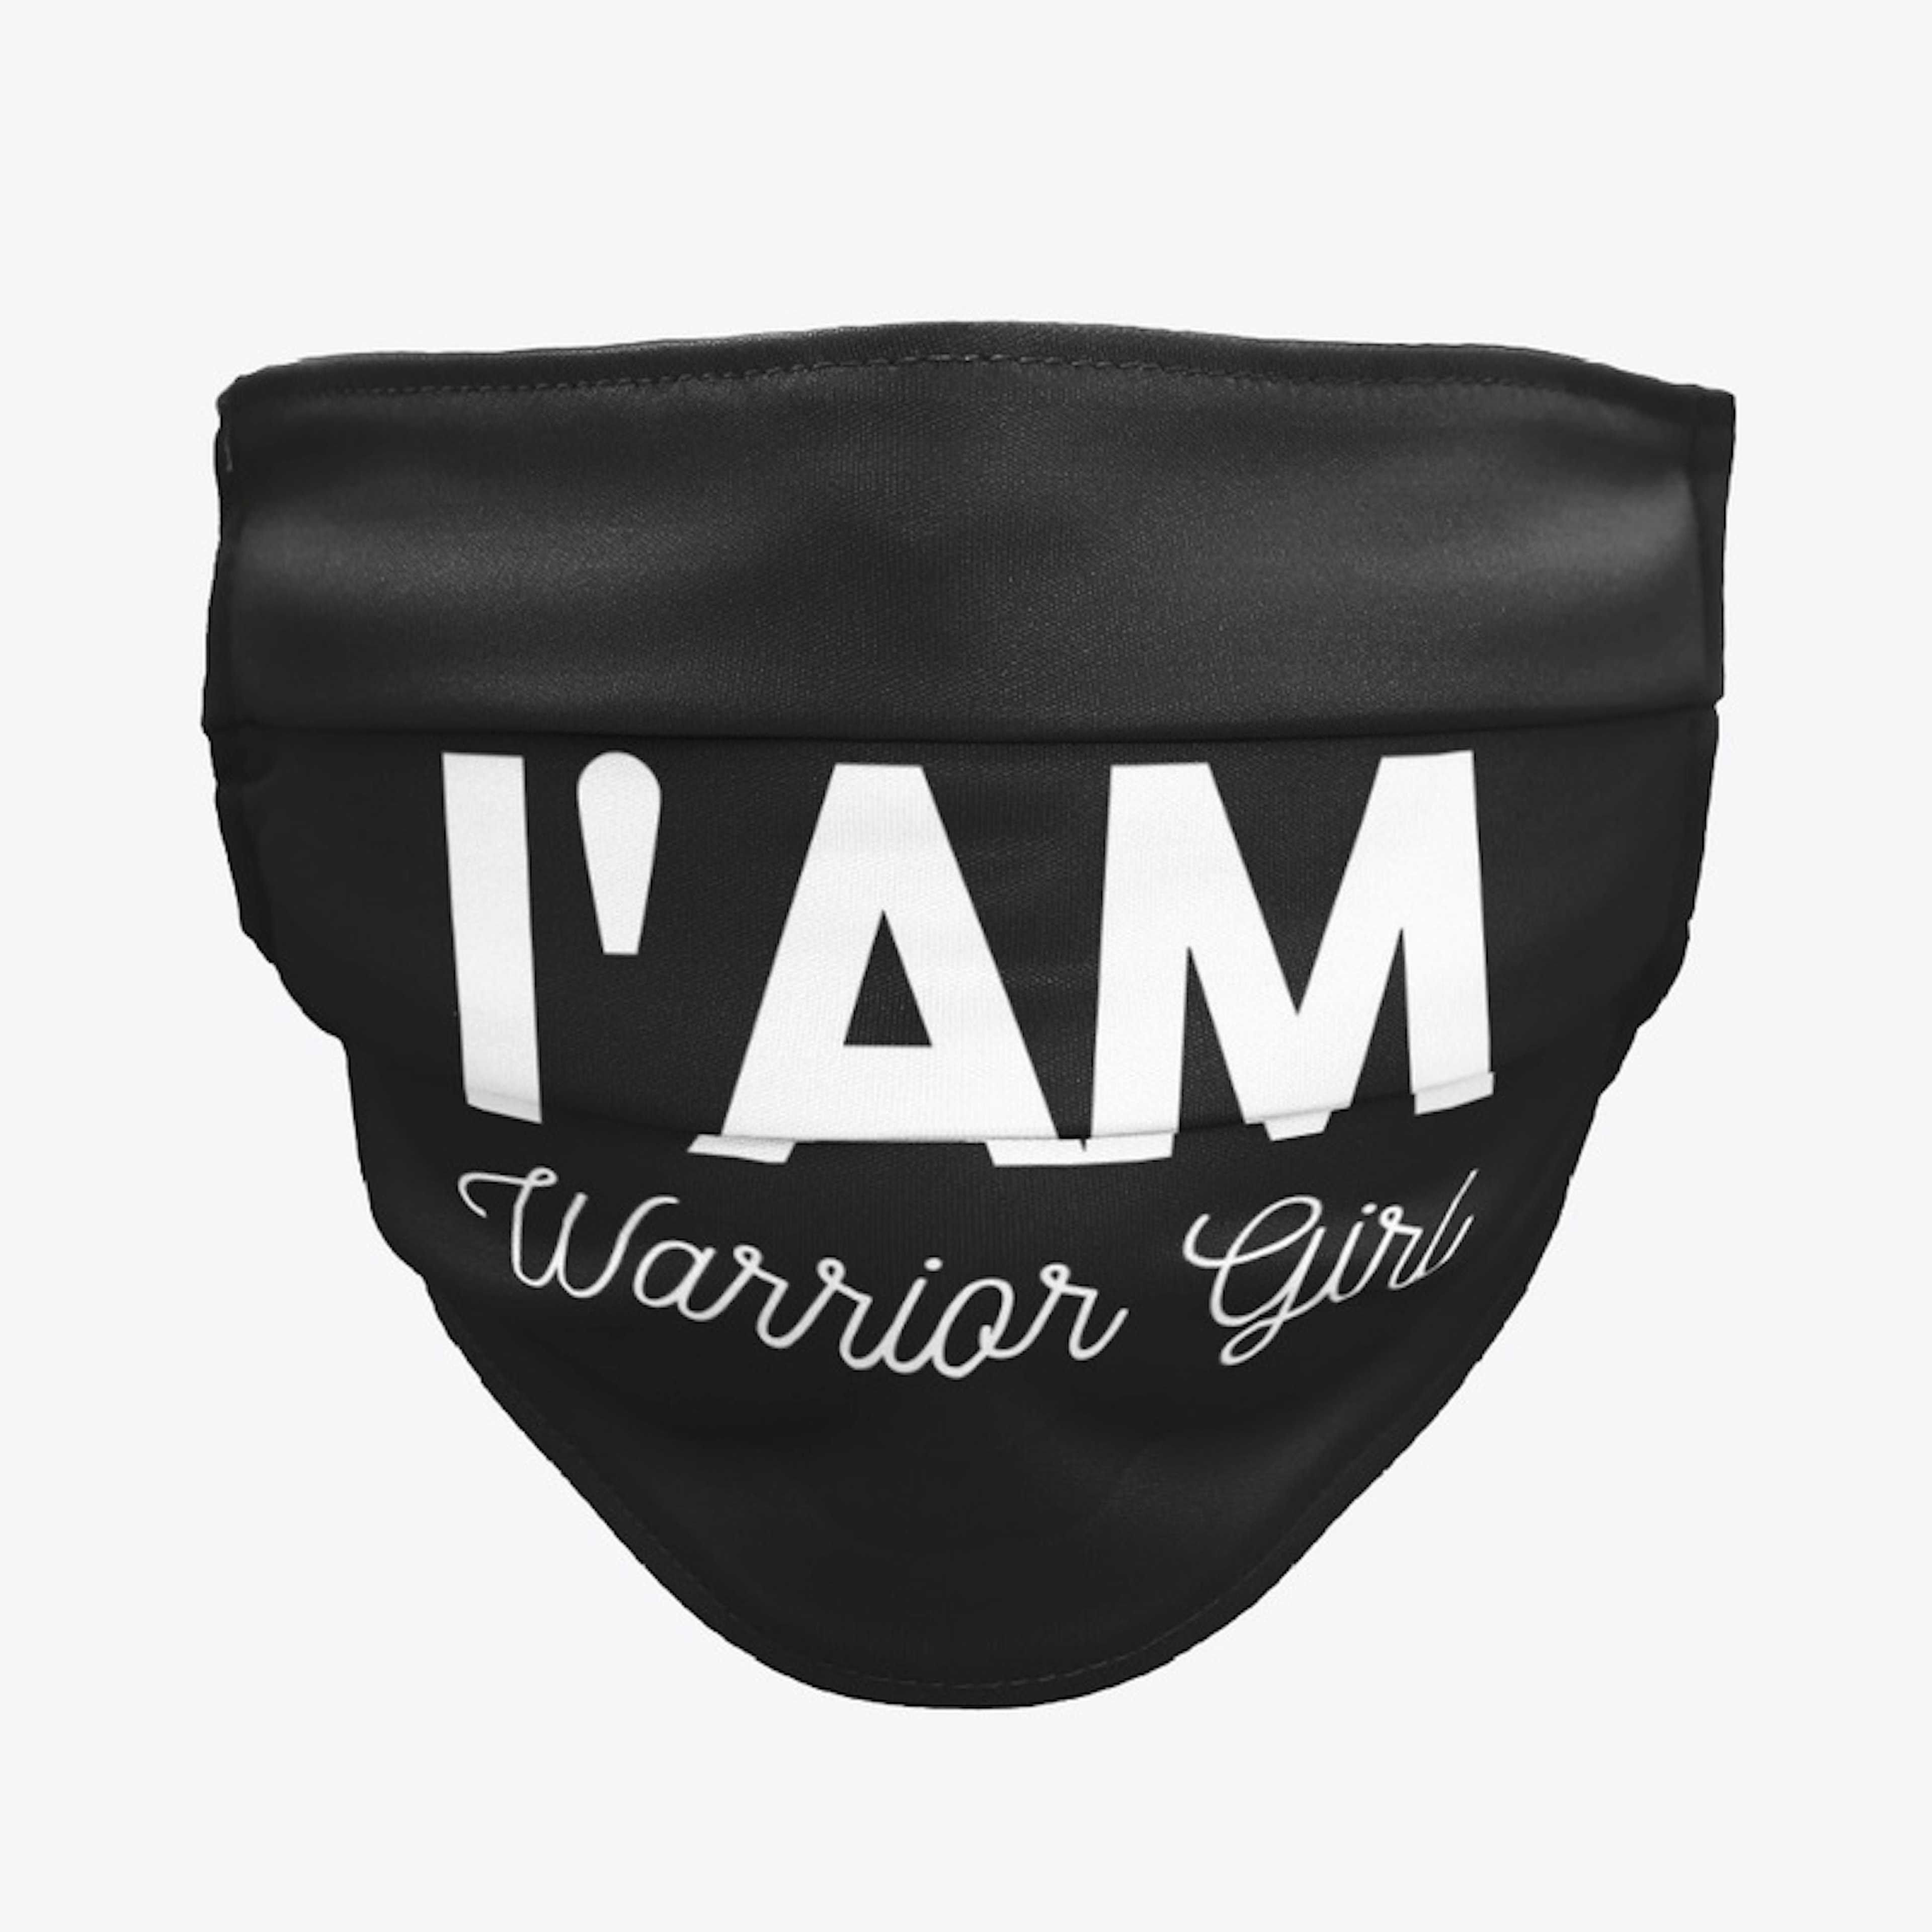 I'AM Warrior Girl